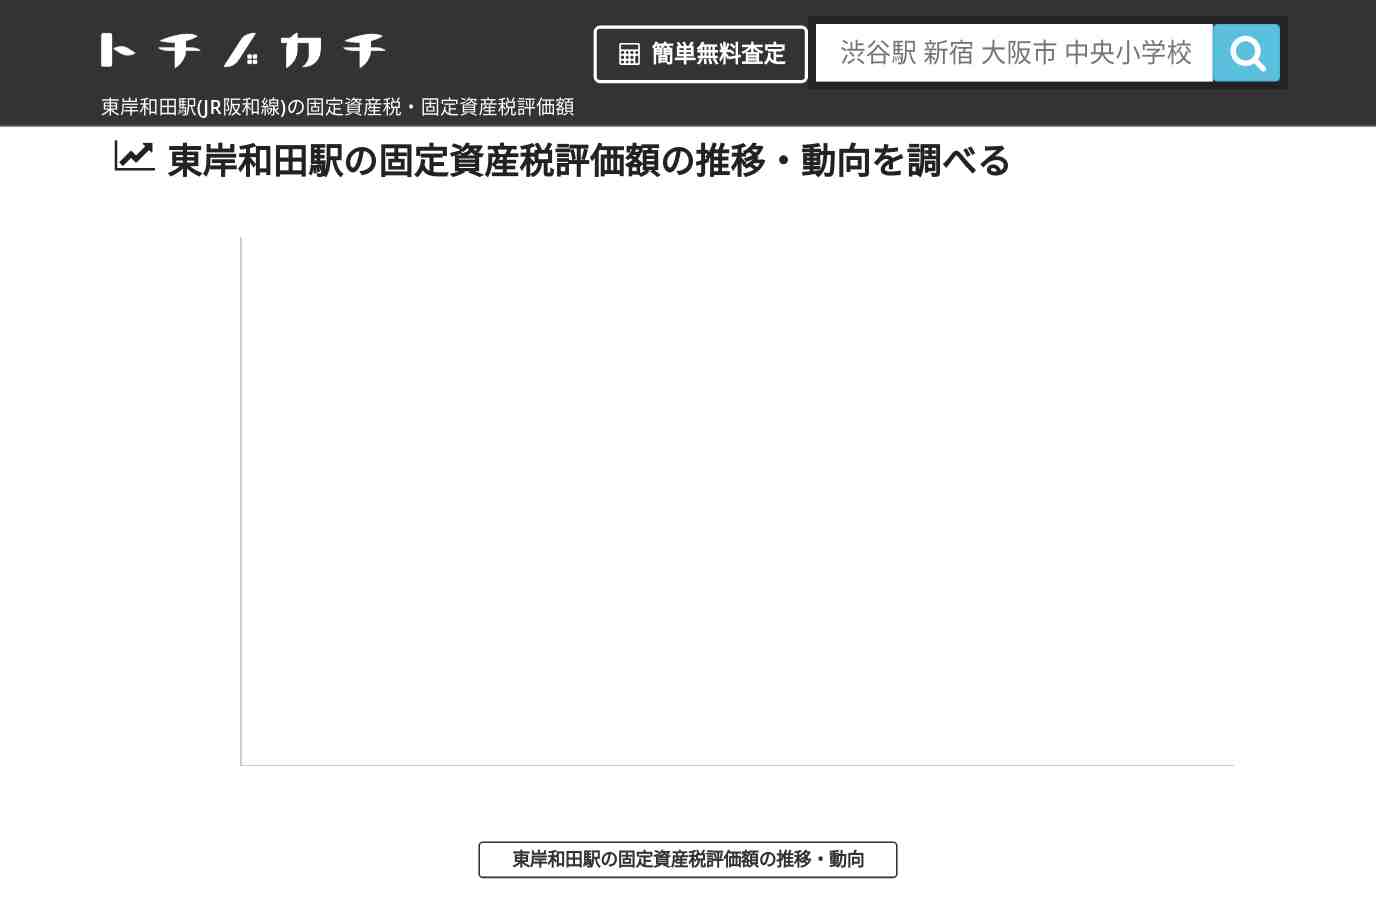 東岸和田駅(JR阪和線)の固定資産税・固定資産税評価額 | トチノカチ